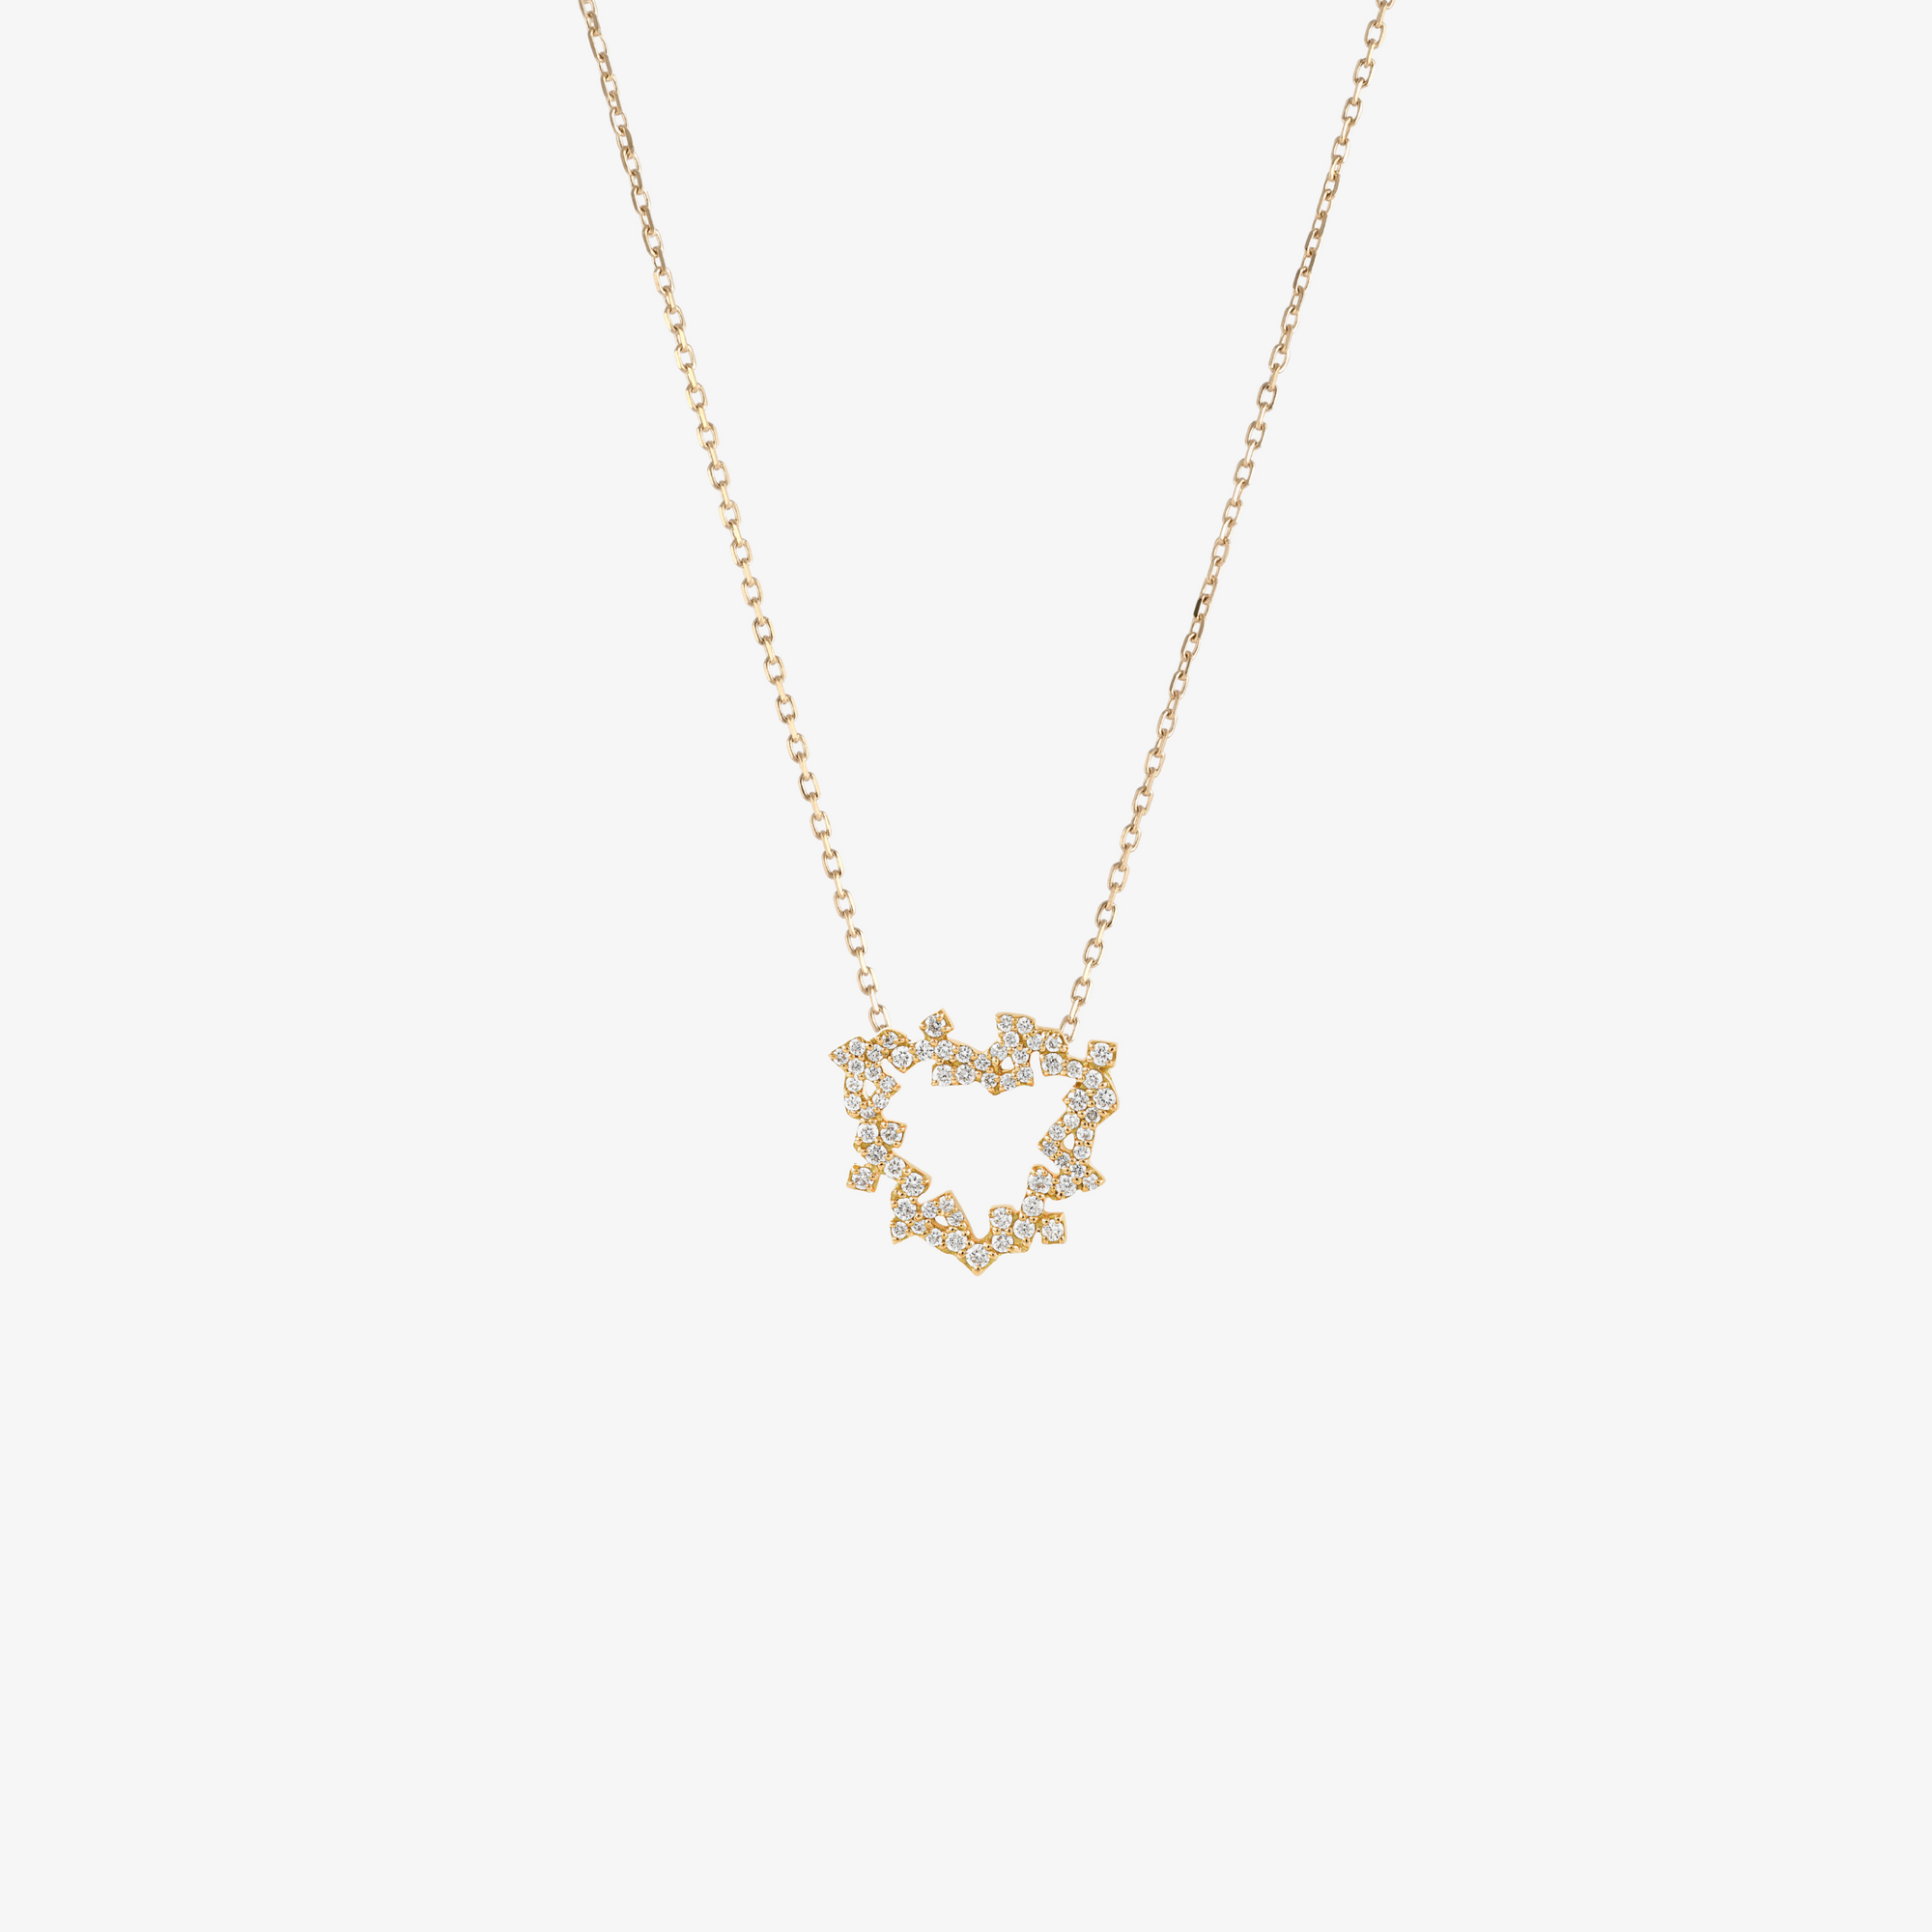 HOBB — 18K Gold & Diamond "Love" Necklace